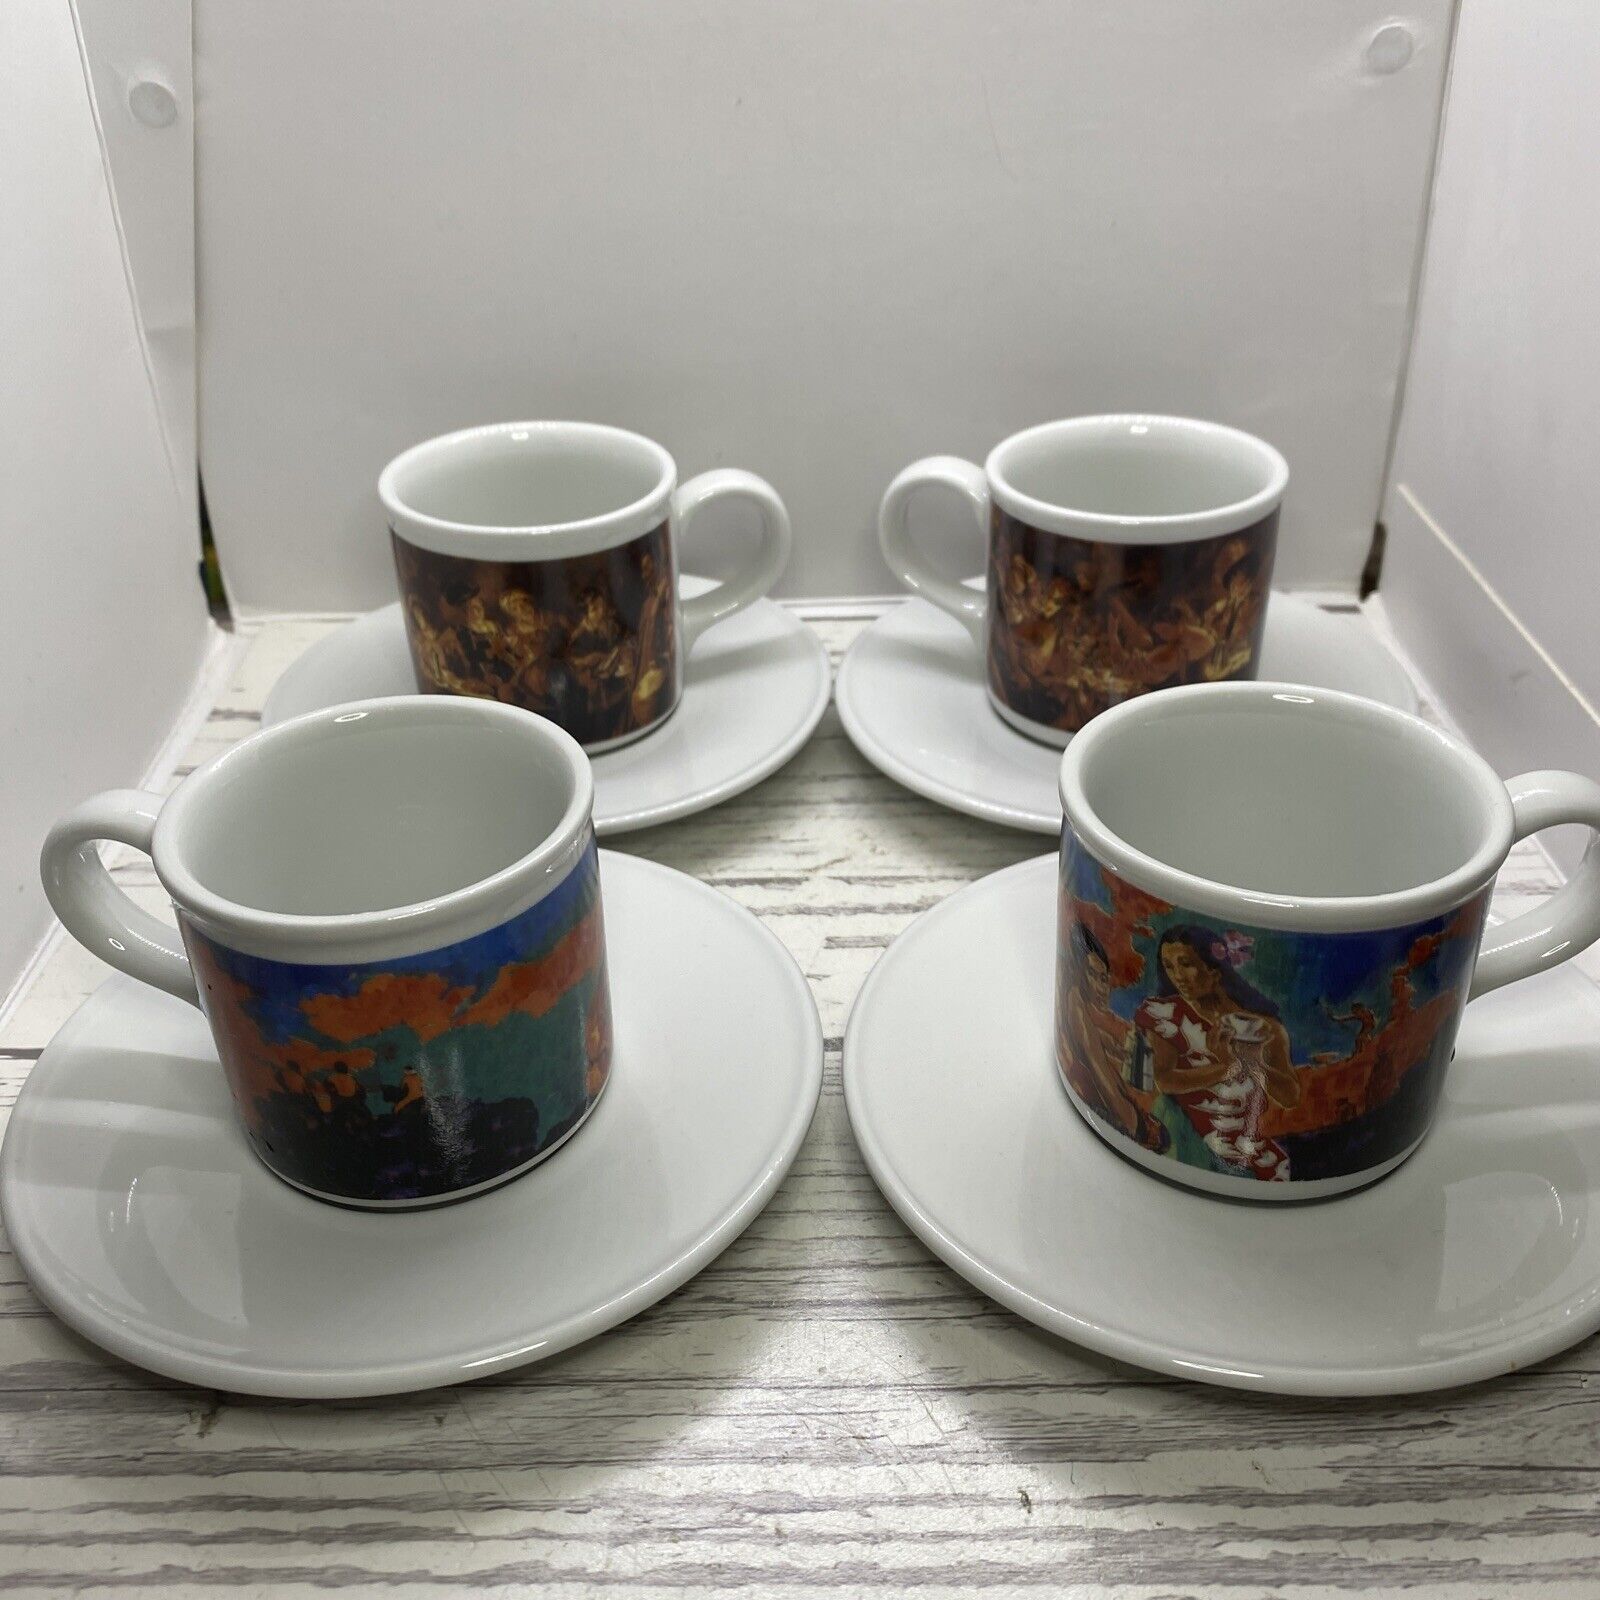 Lavazza Cafe des Arts Limited Edition 4 Vintage Espresso Cup and Saucer Set